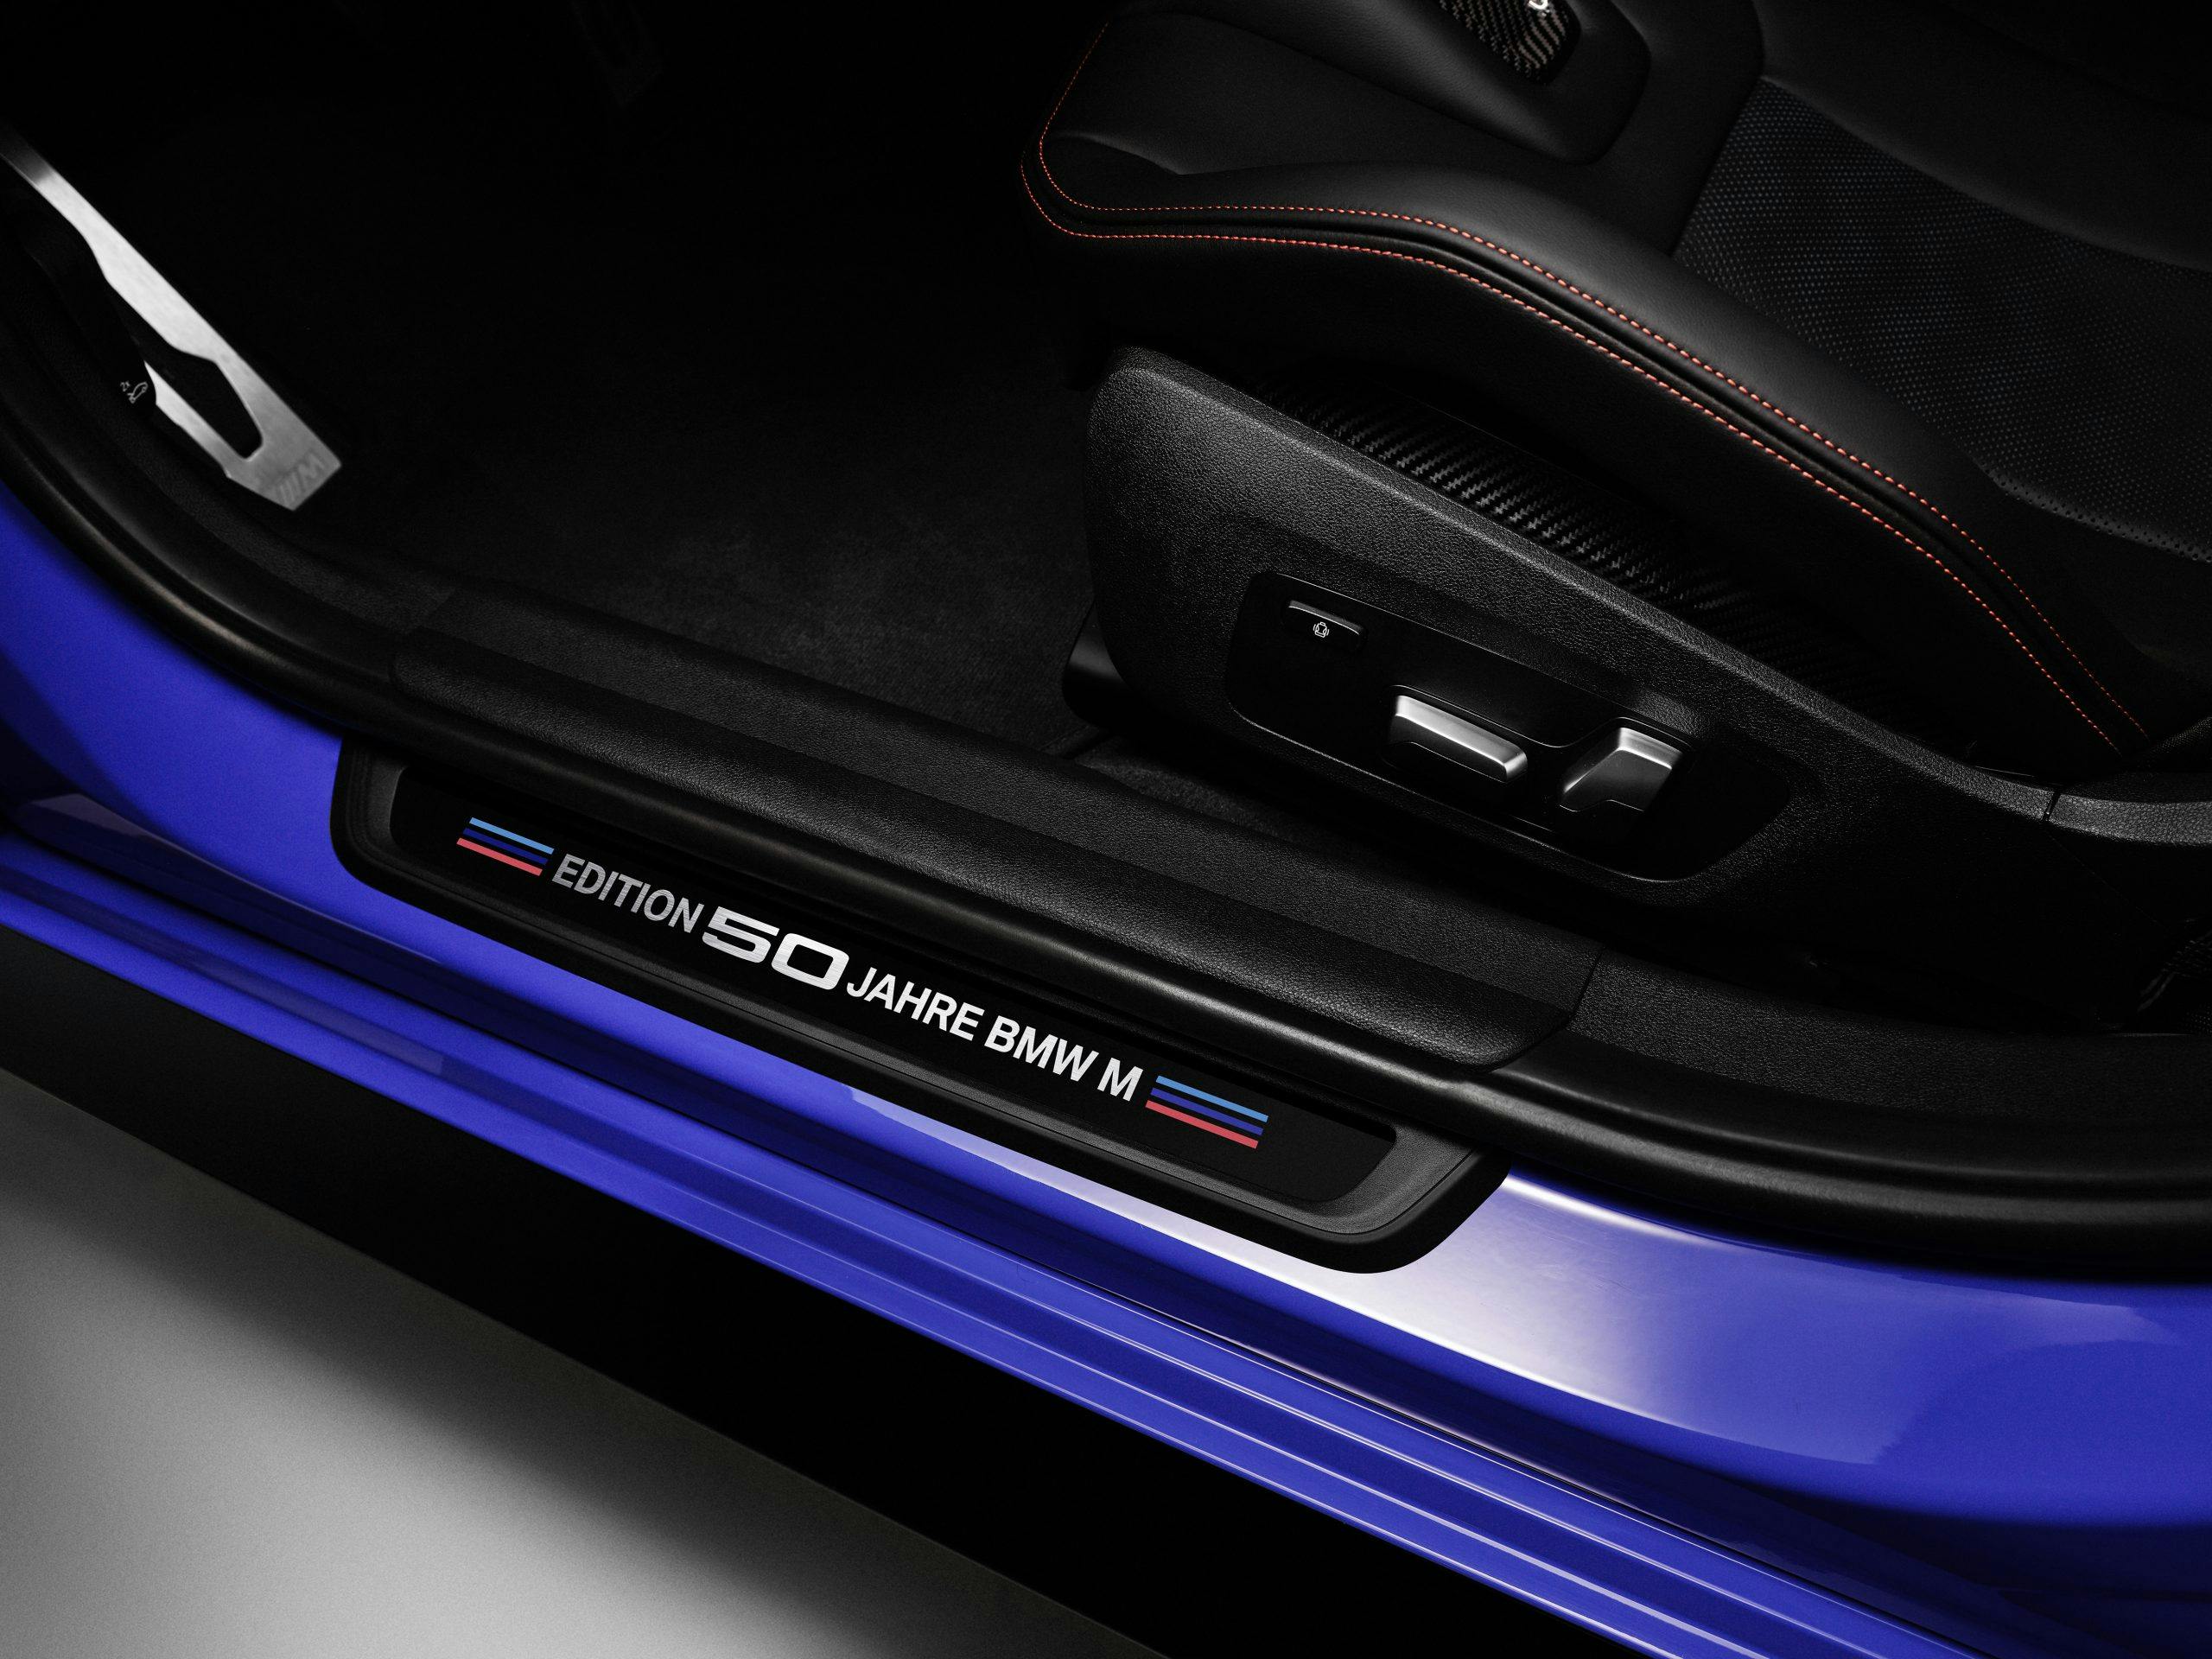 2023 BMW M3 Edition 50 Jahre BMW M interlagos blue techno violet wheels